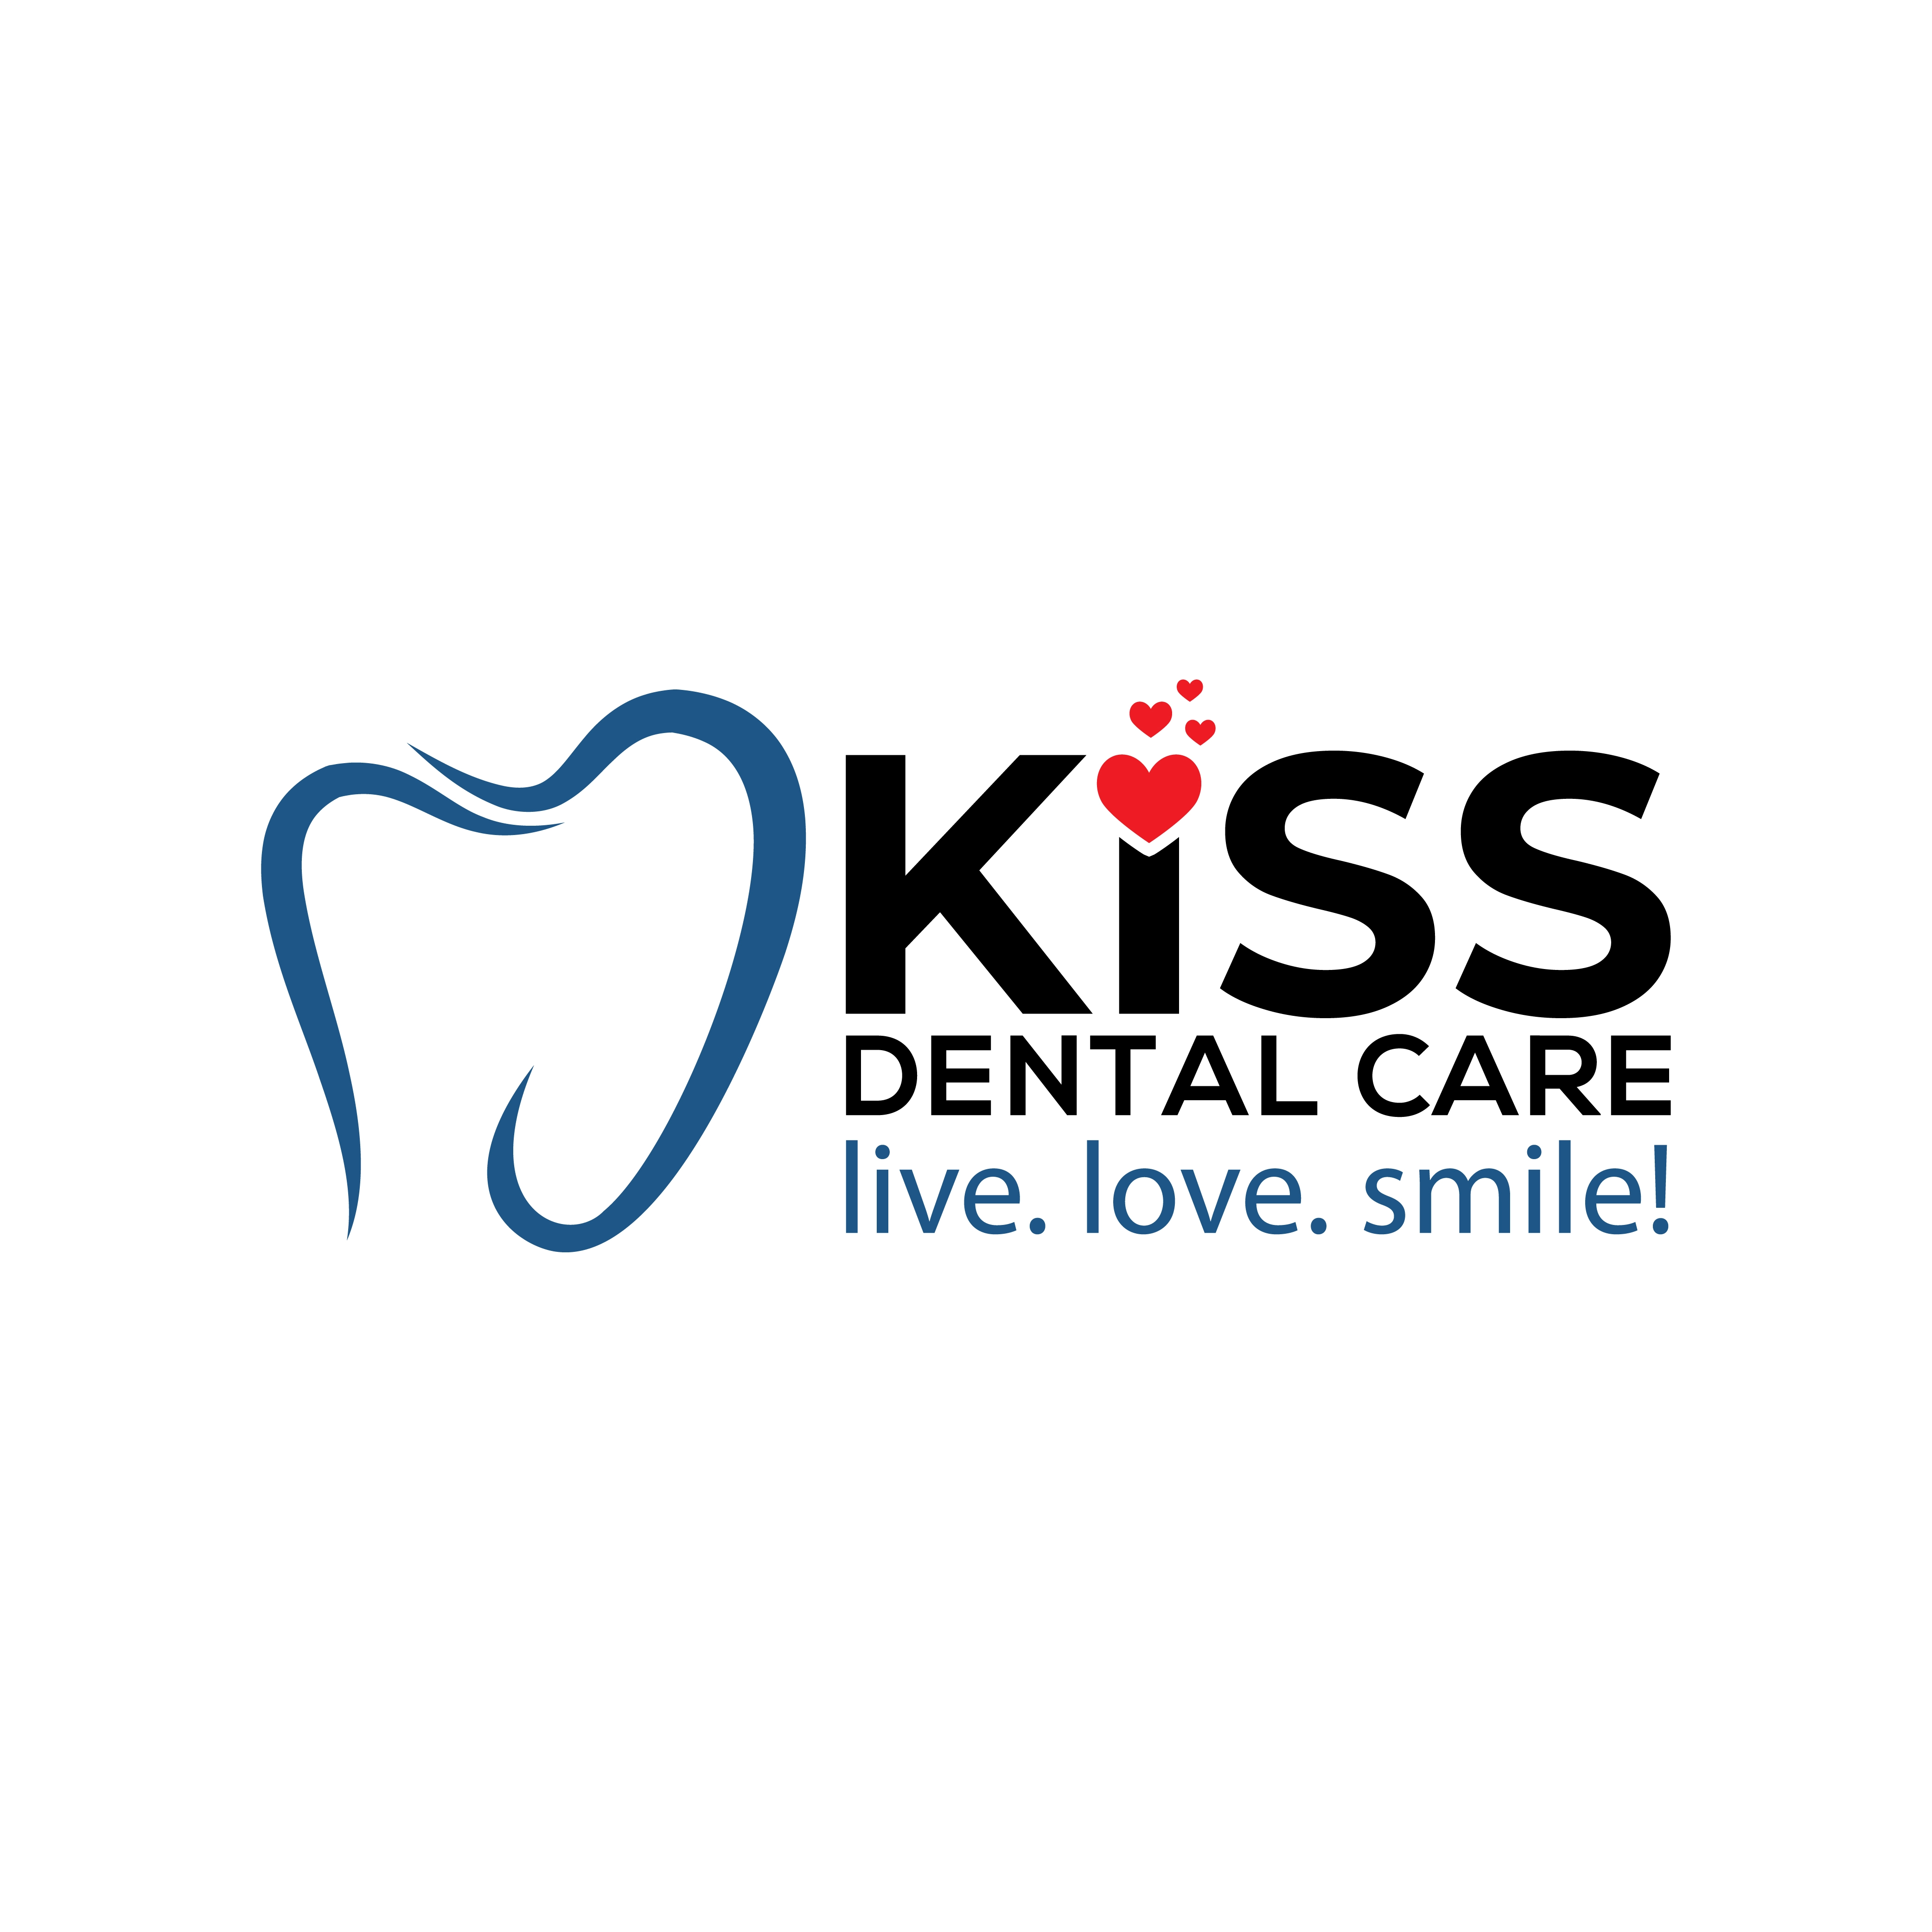 KISS DENTAL CARE - Finalized logo